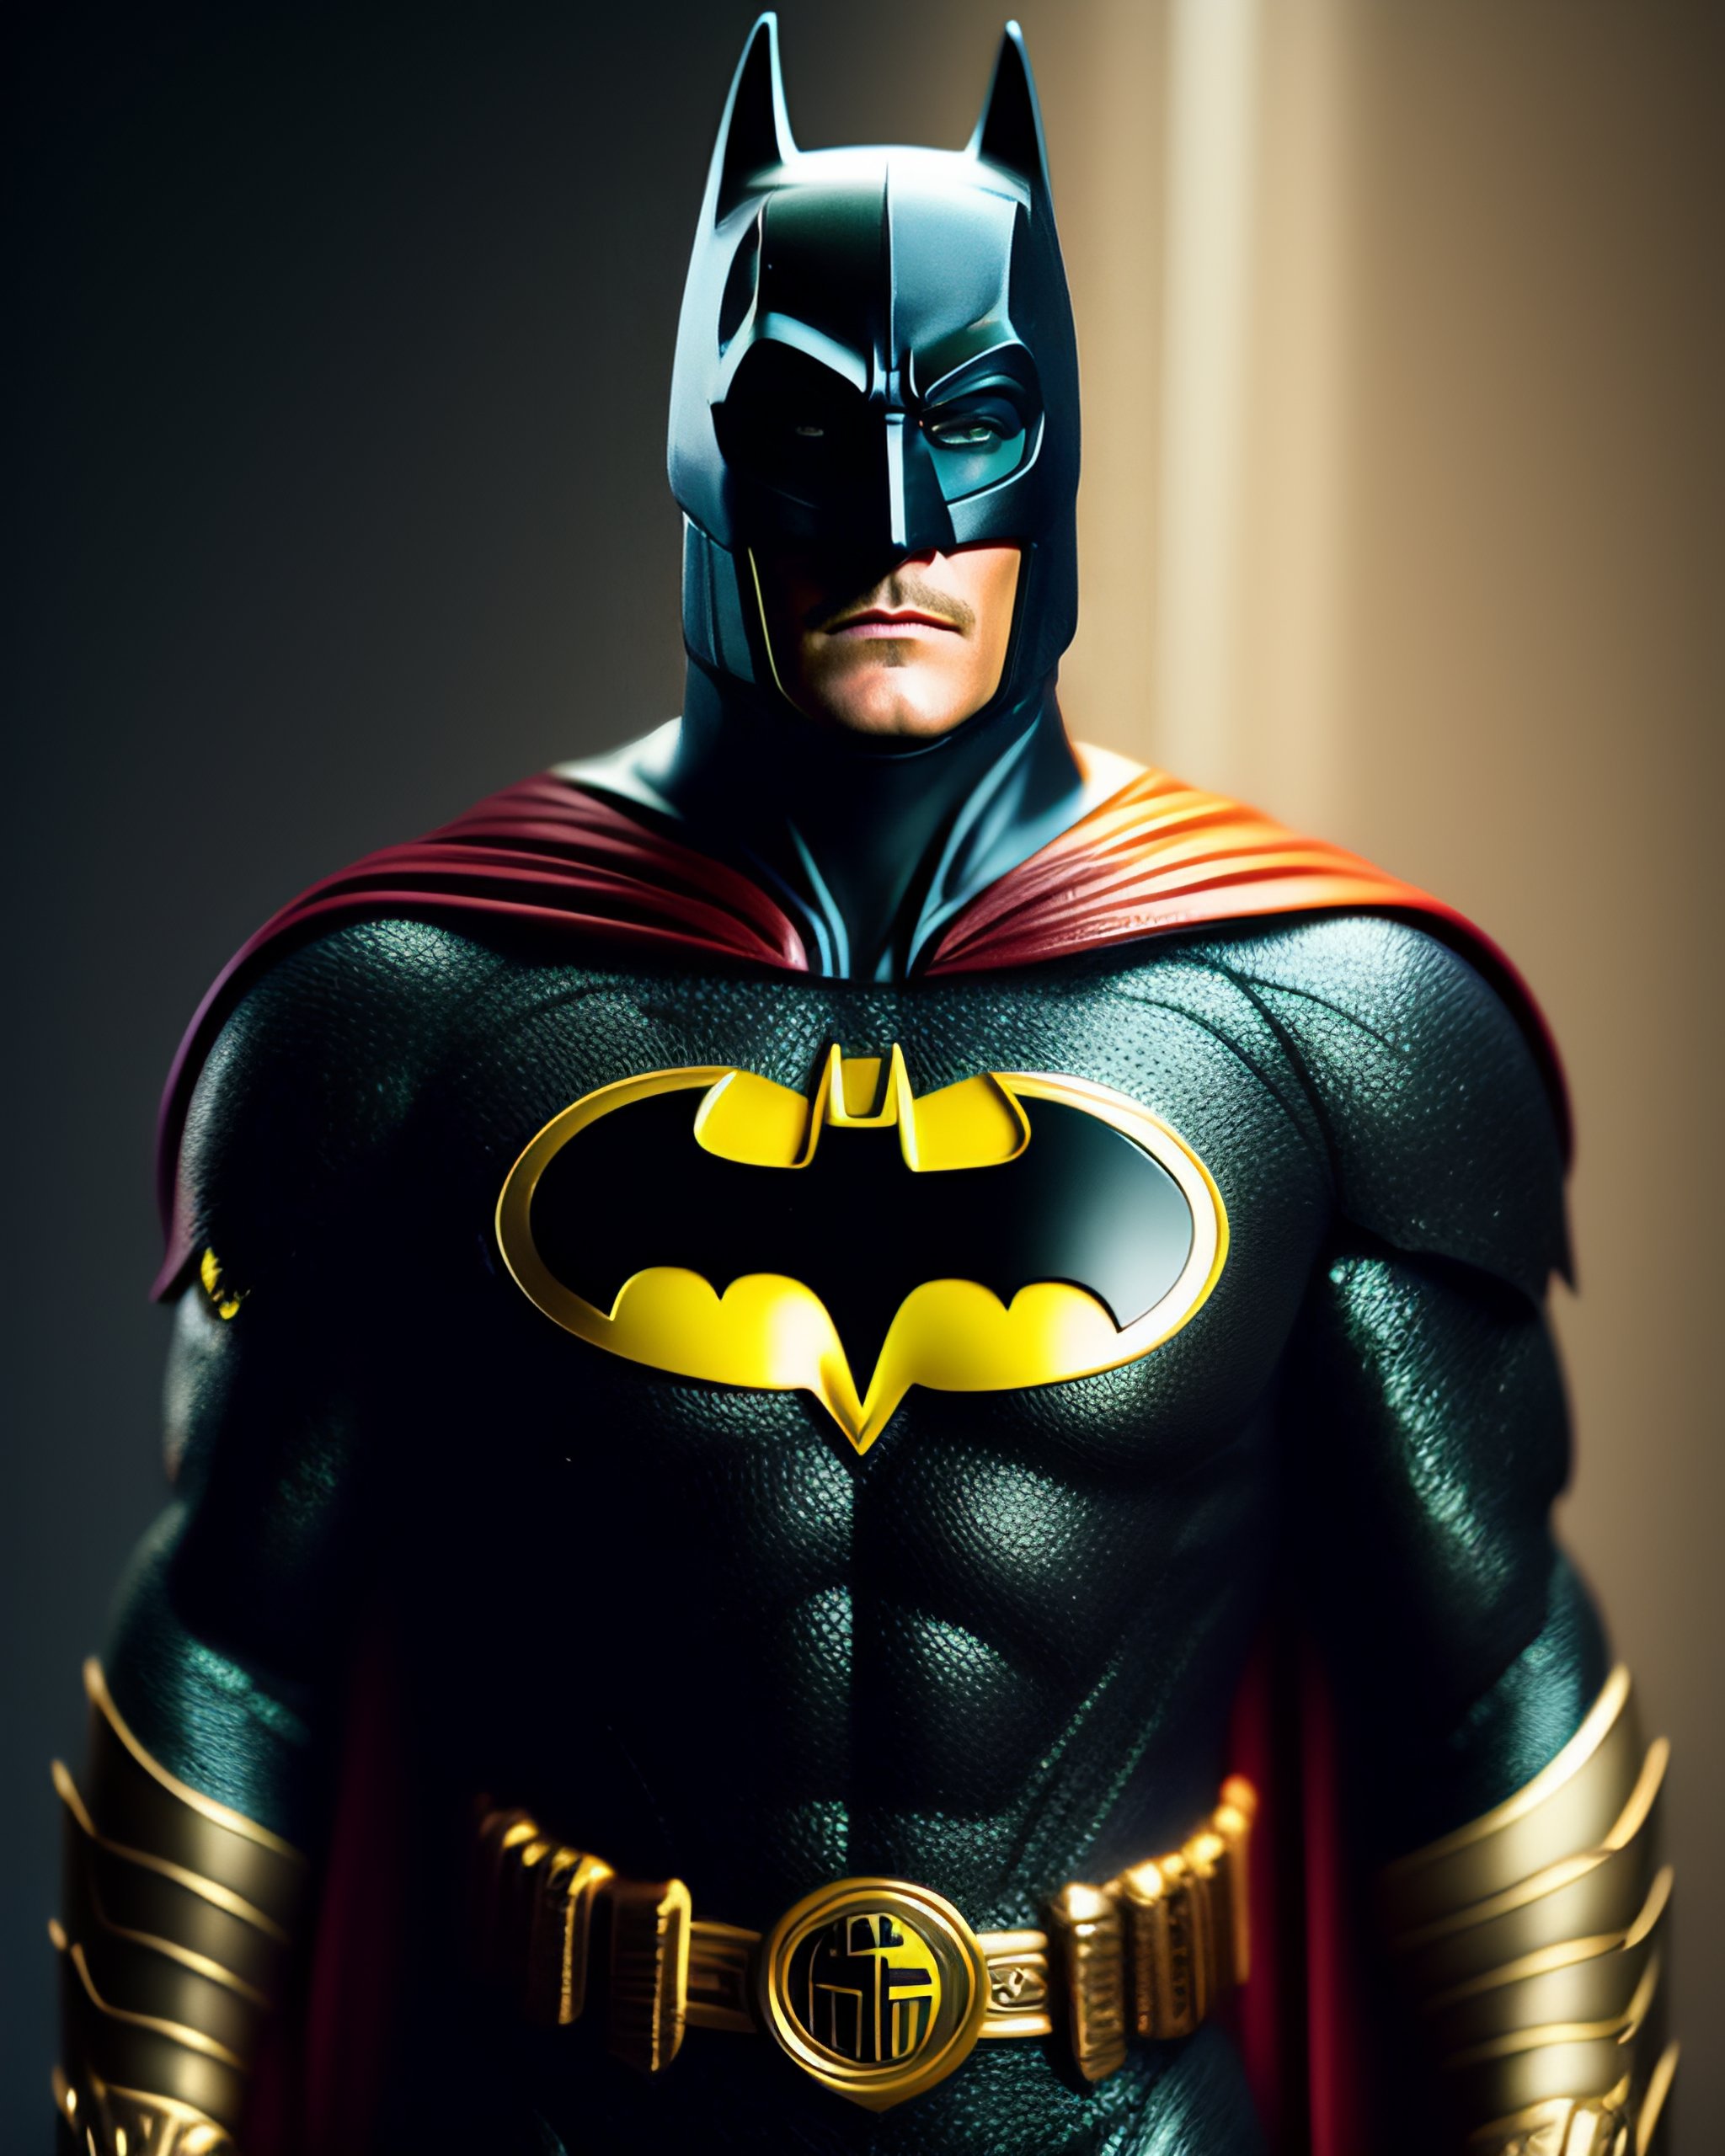 Lexica - Actor Joaquin Phoenix as Batman, full hd image and full body  presentation